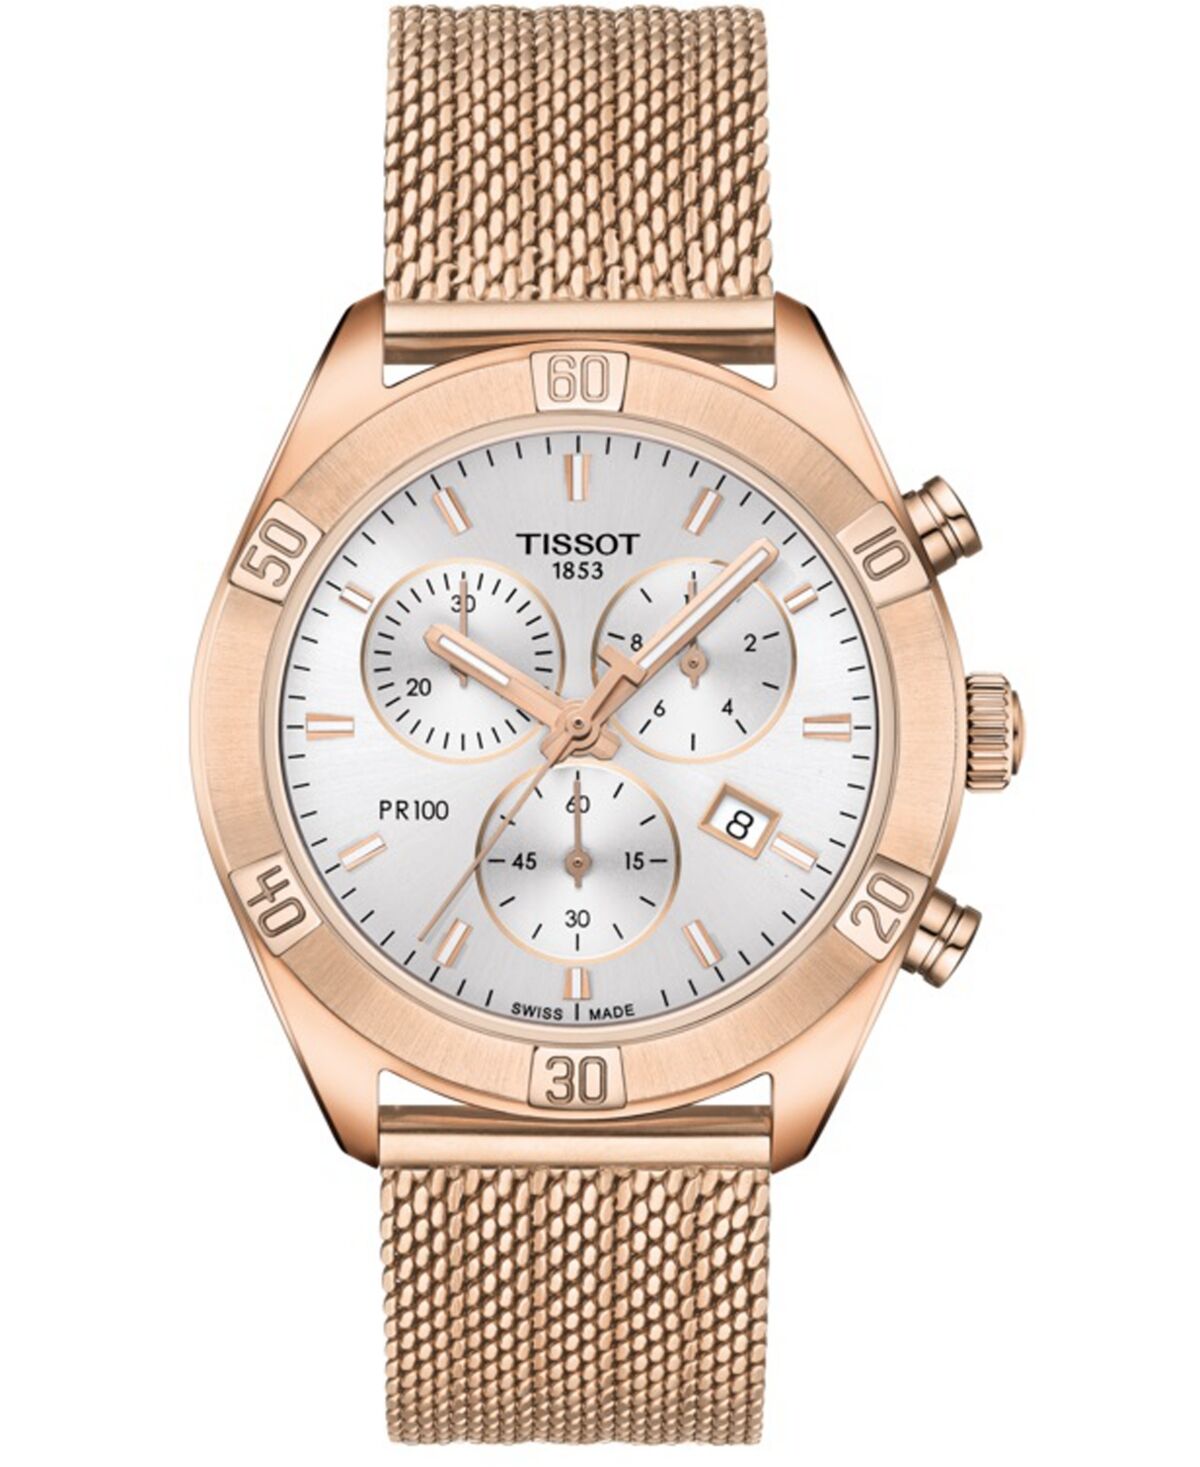 Tissot Women's Swiss Chronograph Pr 100 Sport Chic T-Classic Rose Gold-Tone Stainless Steel Mesh Bracelet Watch 38mm - Rose Gold